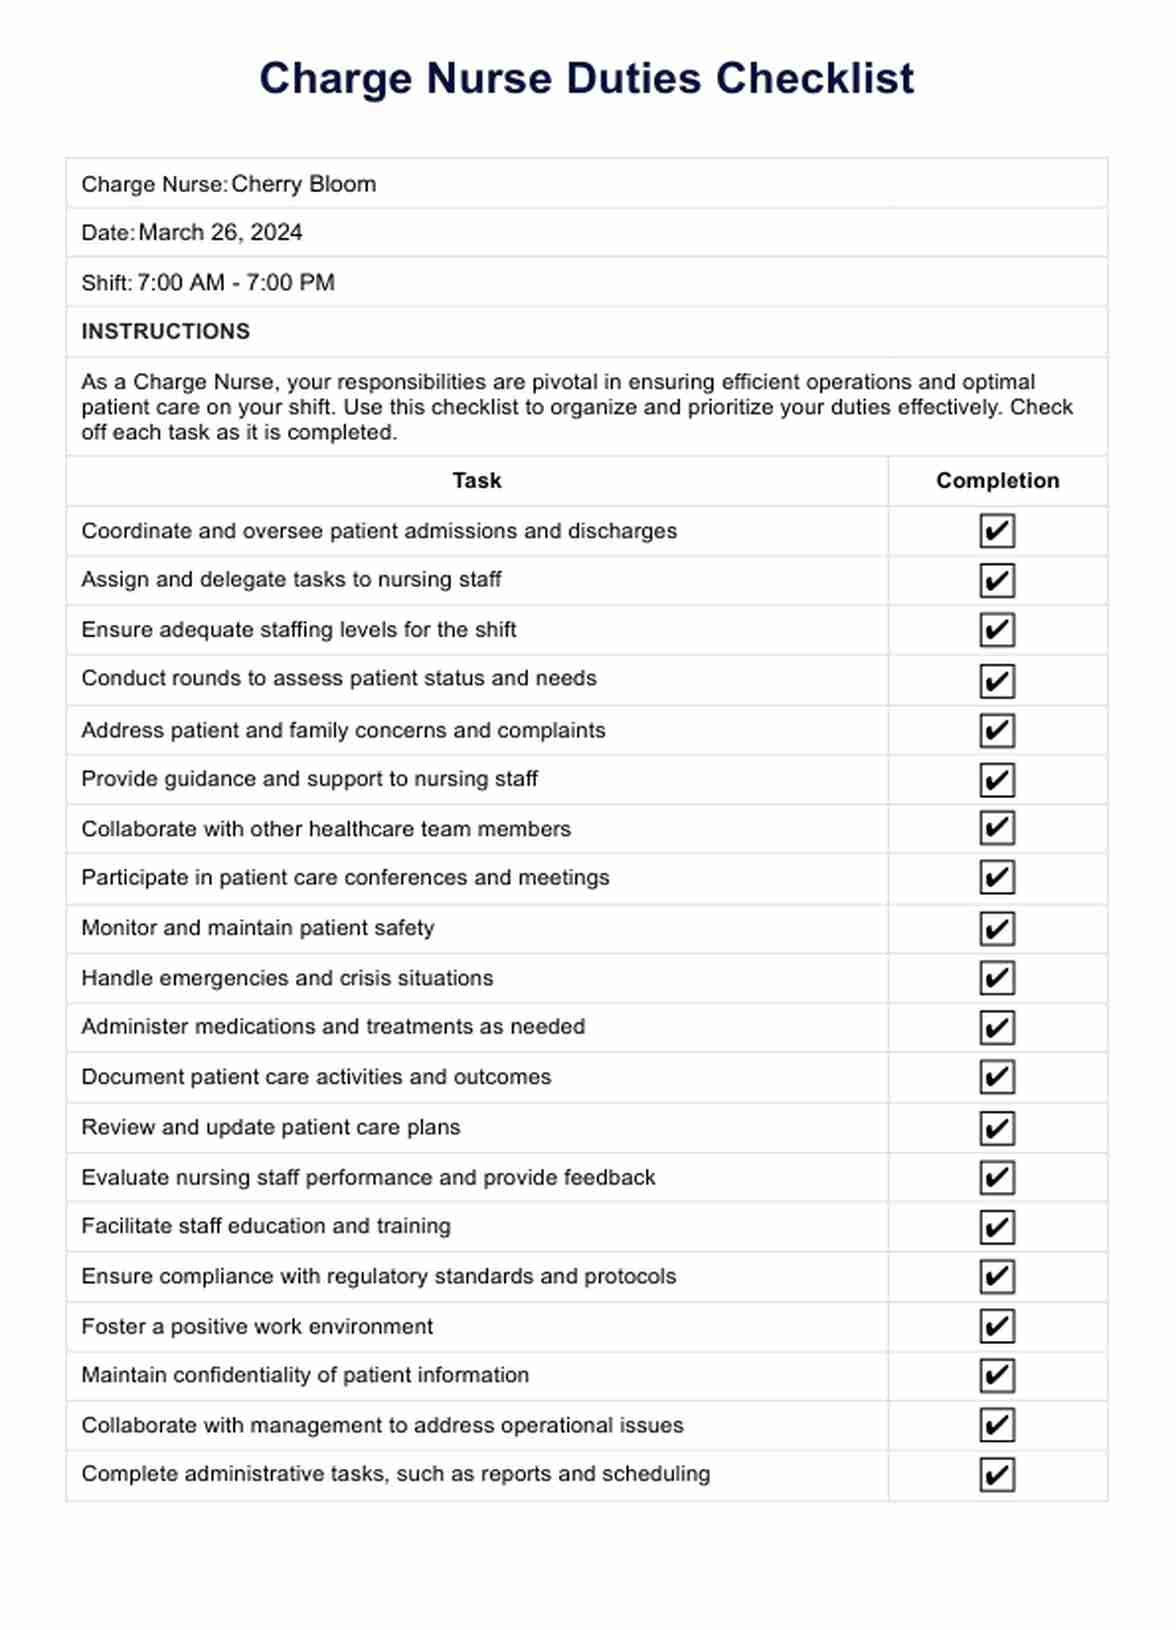 Charge Nurse Duties Checklist PDF Example